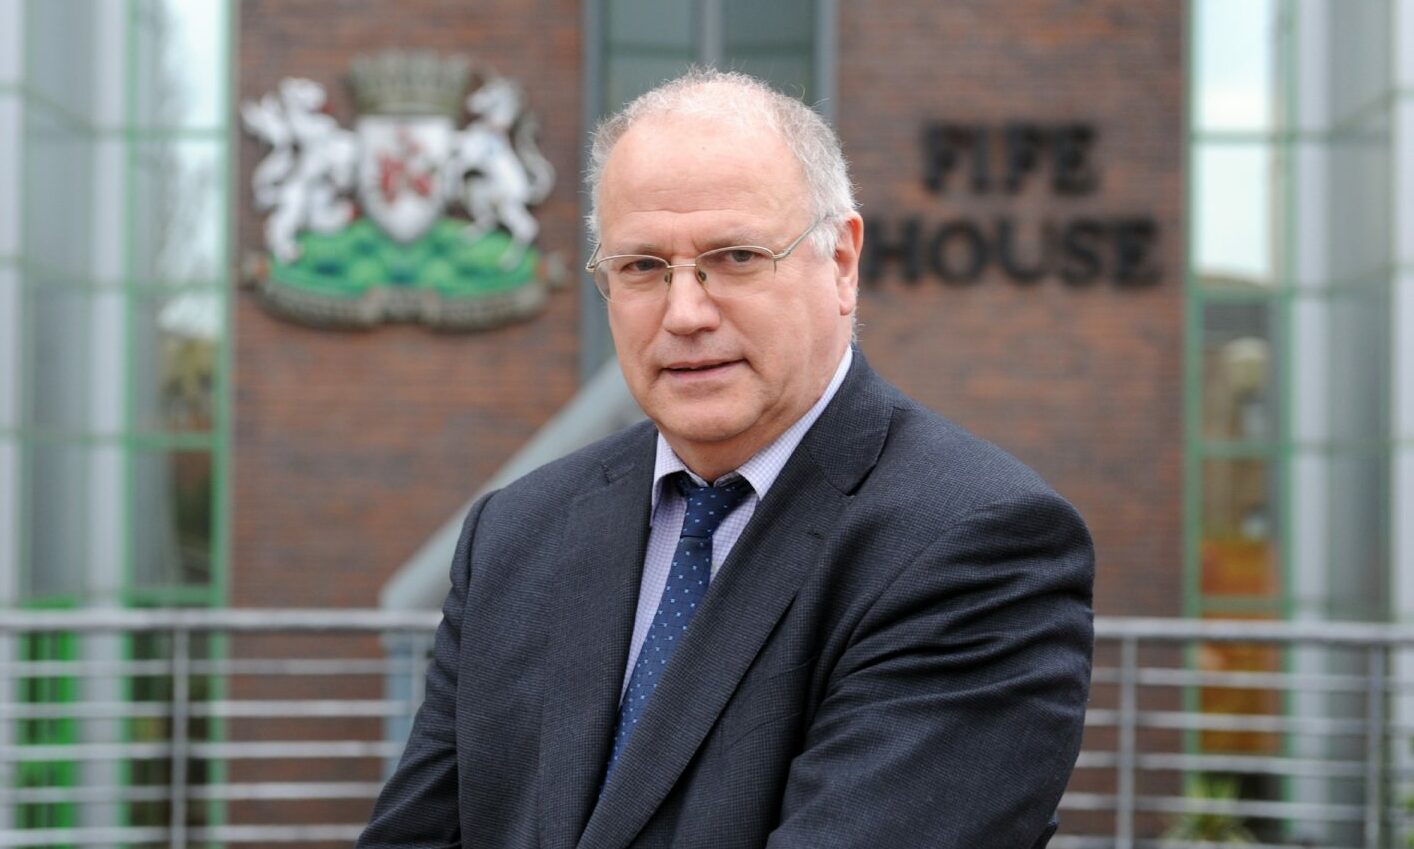 Fife council leader David Ross